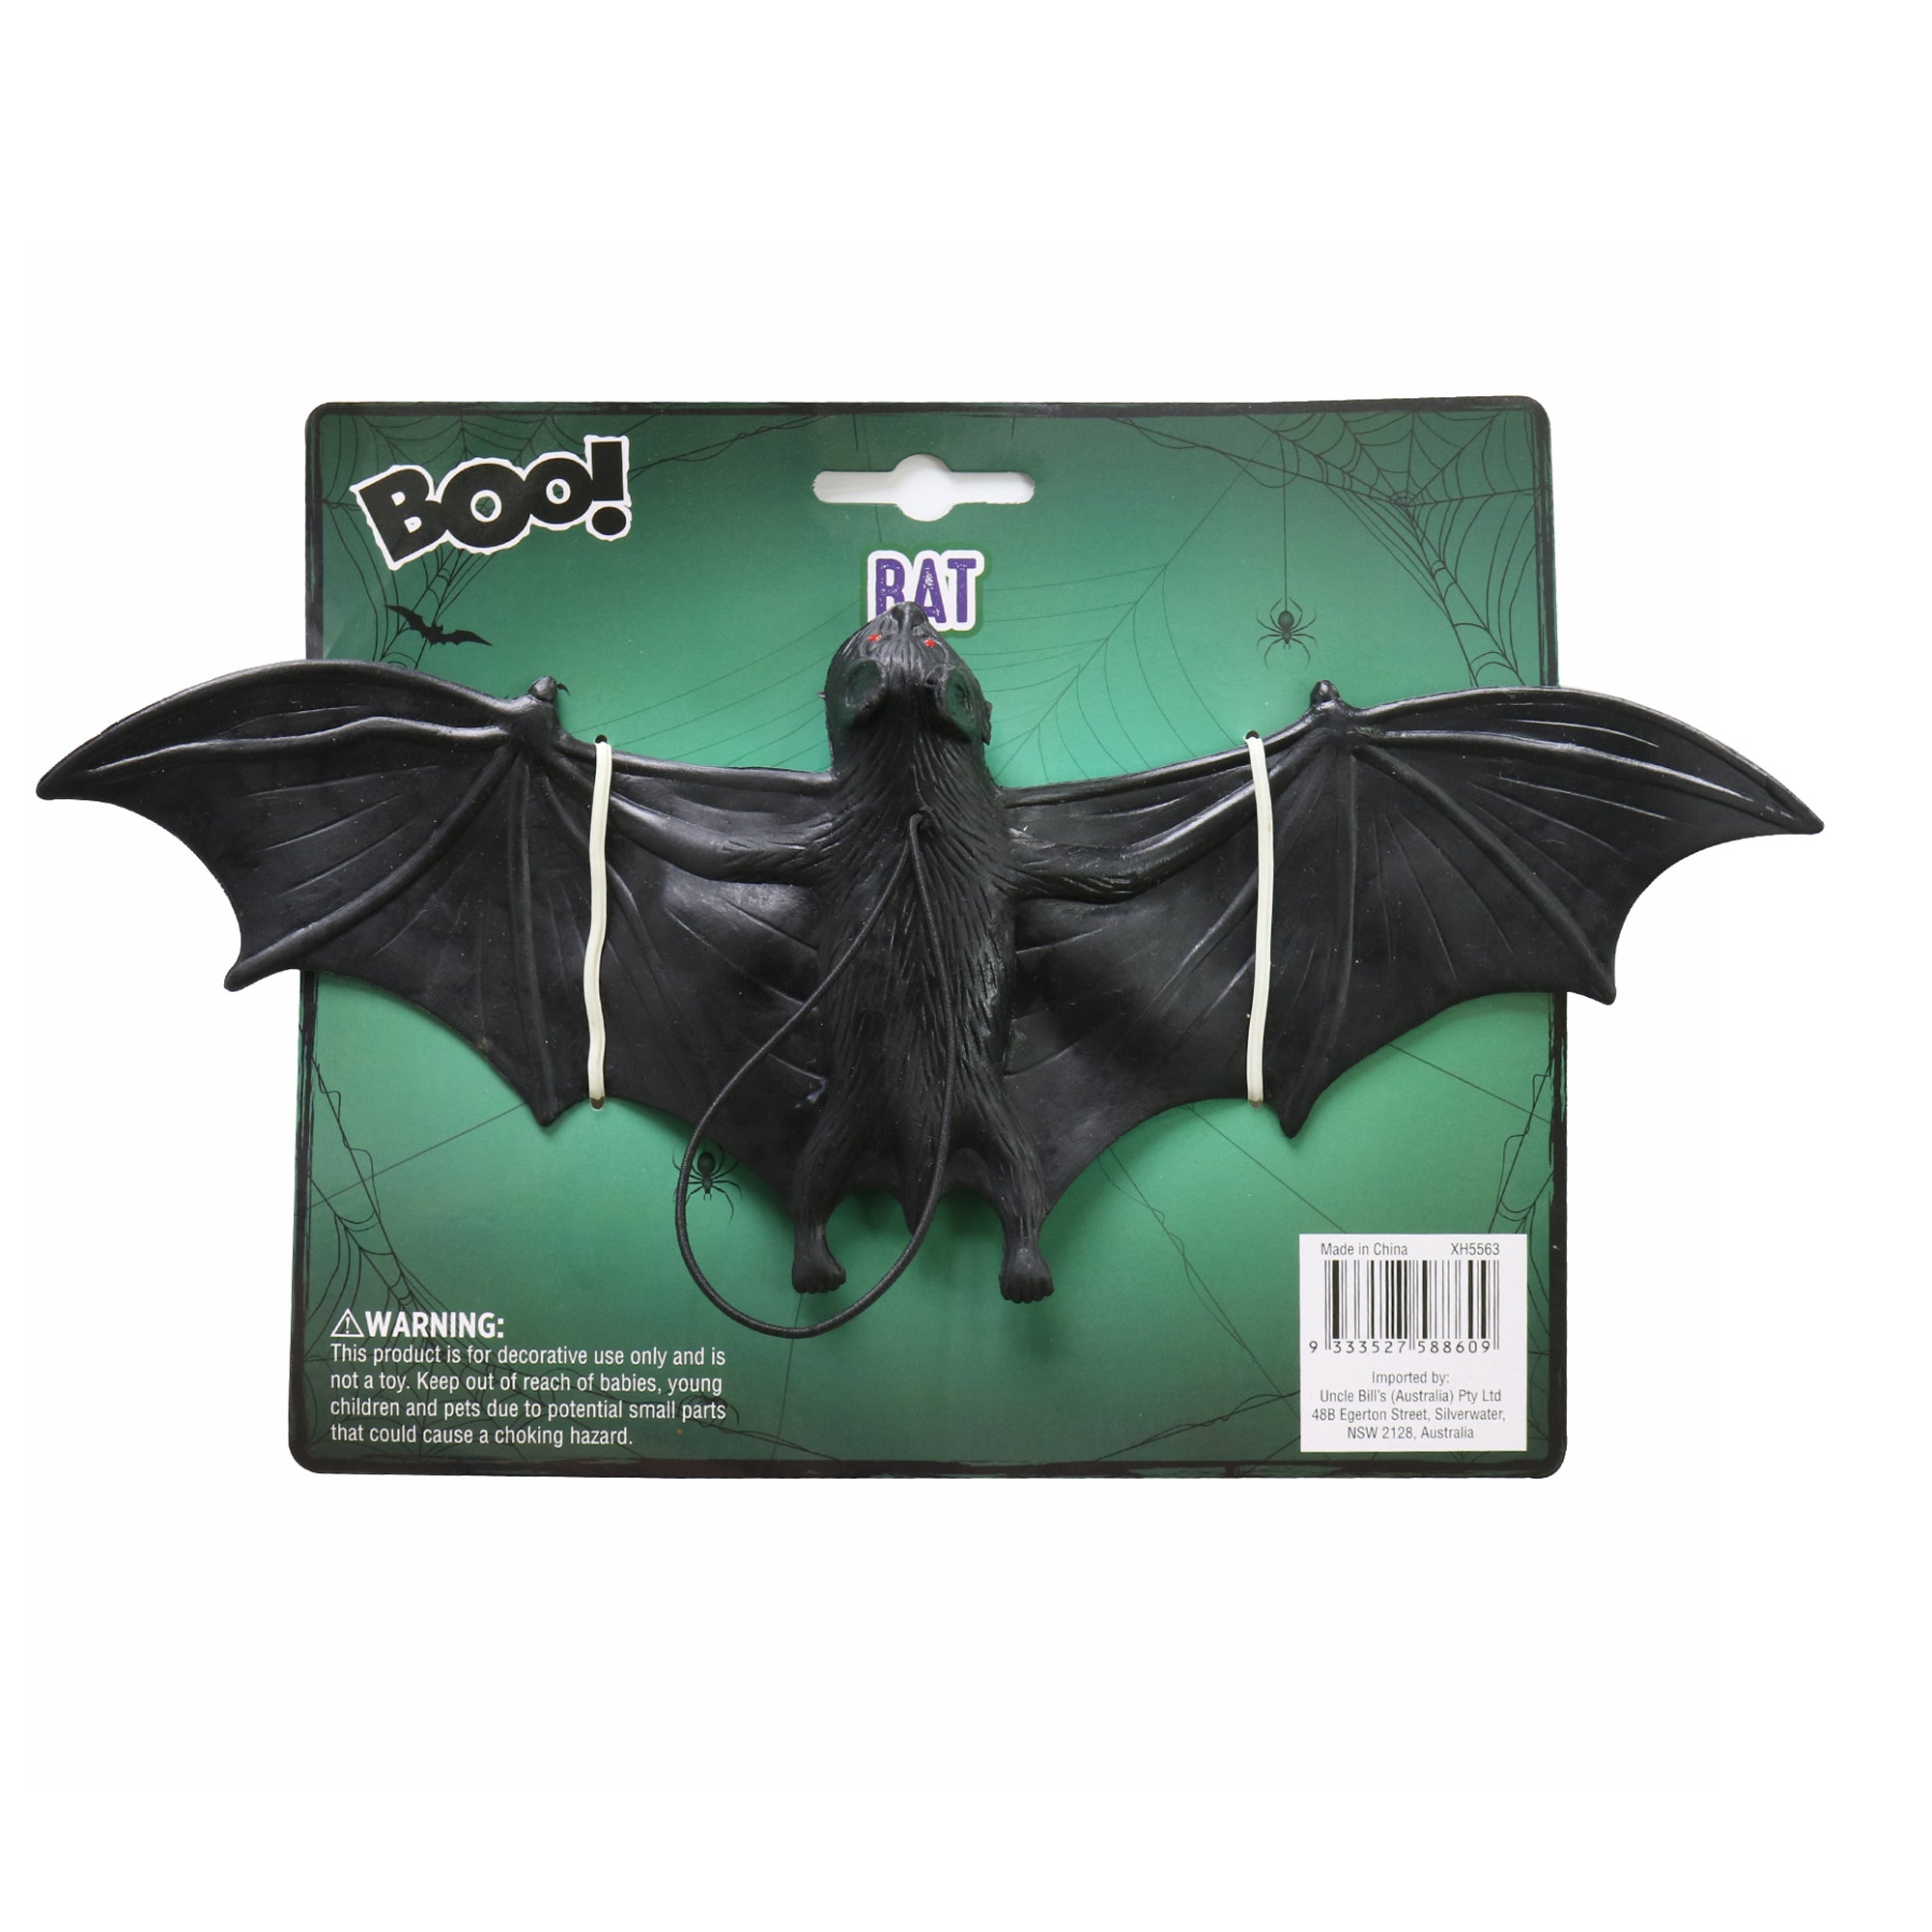 Hanging Bat 21cm